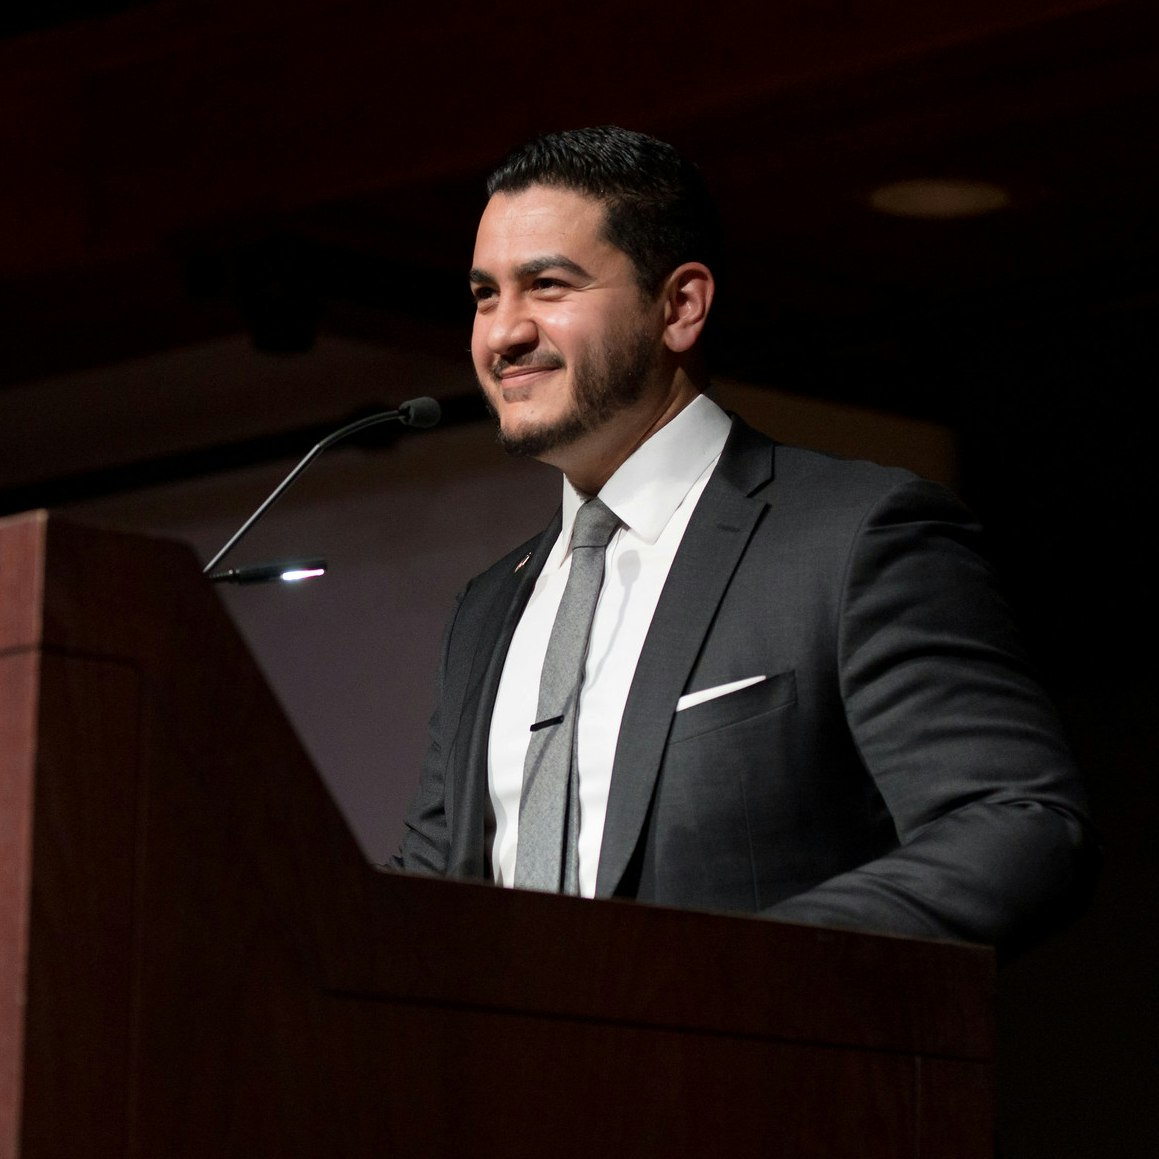 Abdul El-Sayed stands at a podium smiling.